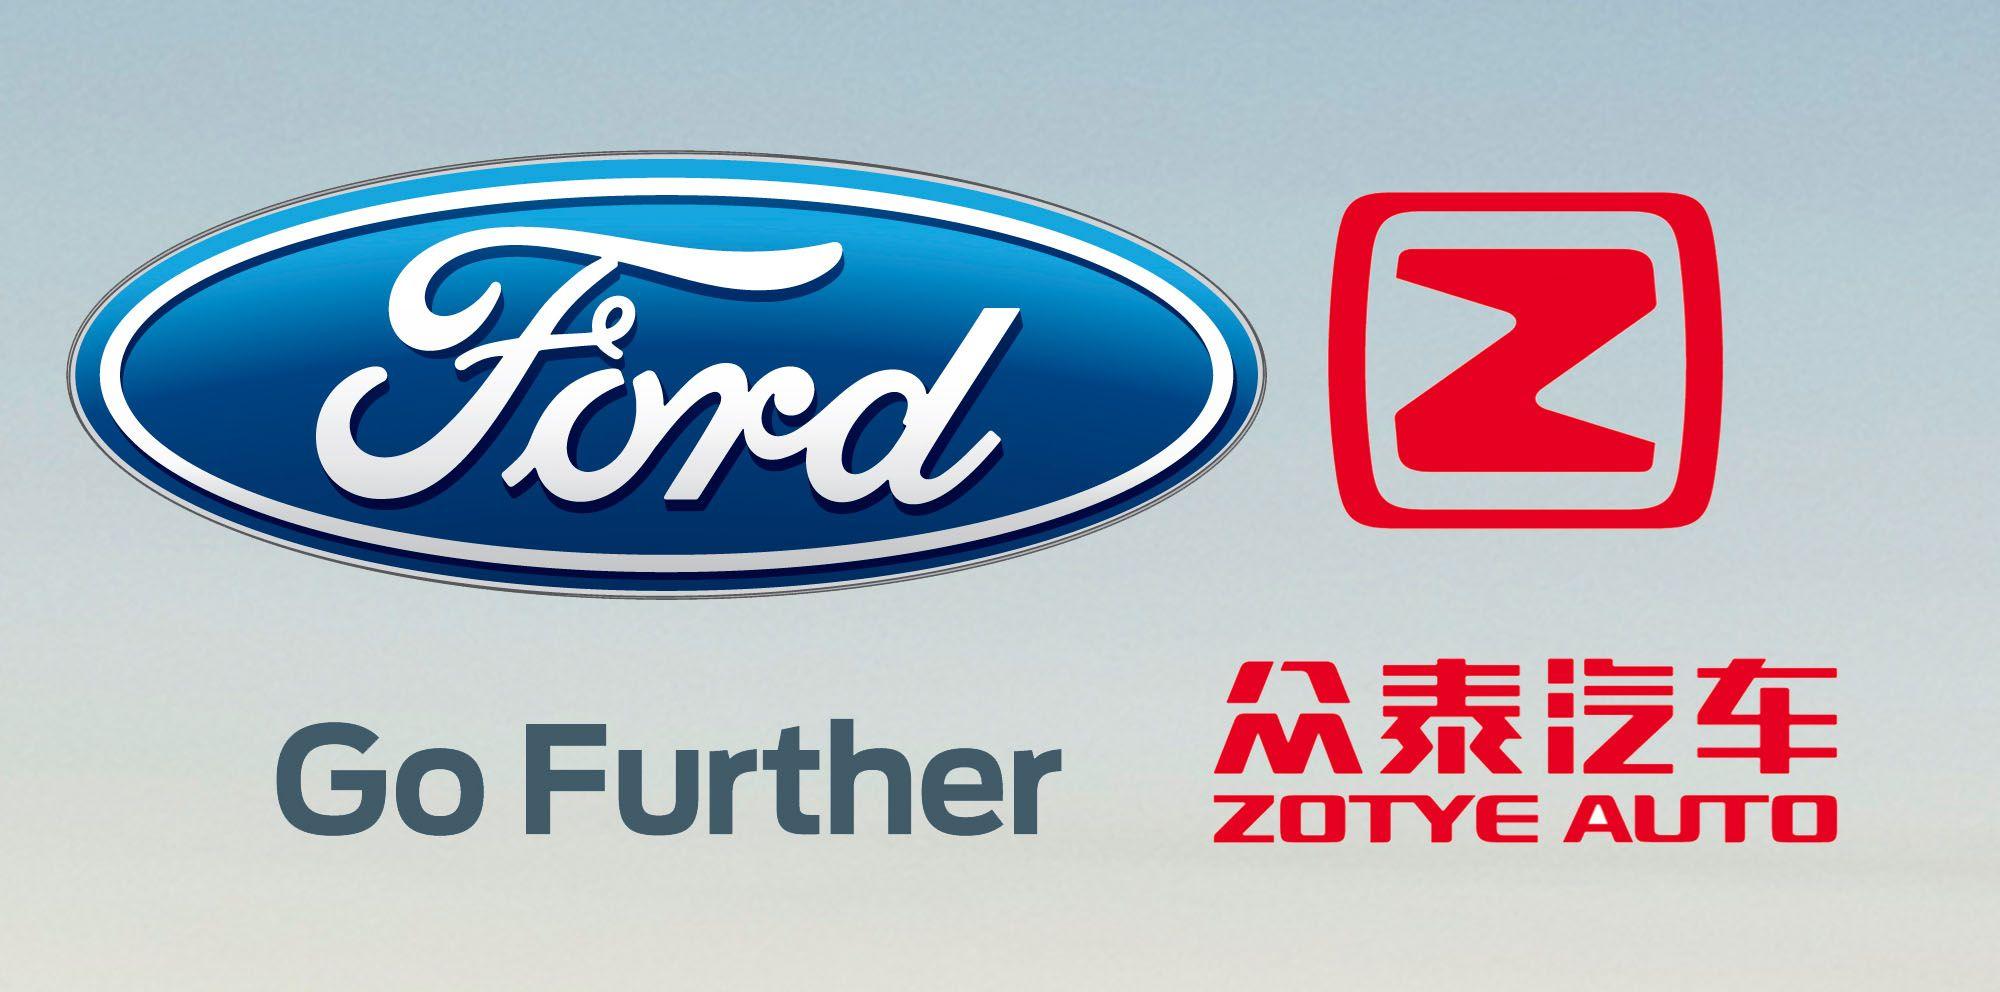 Zotye Logo - Ford, Zotye investigating joint venture EV brand for China